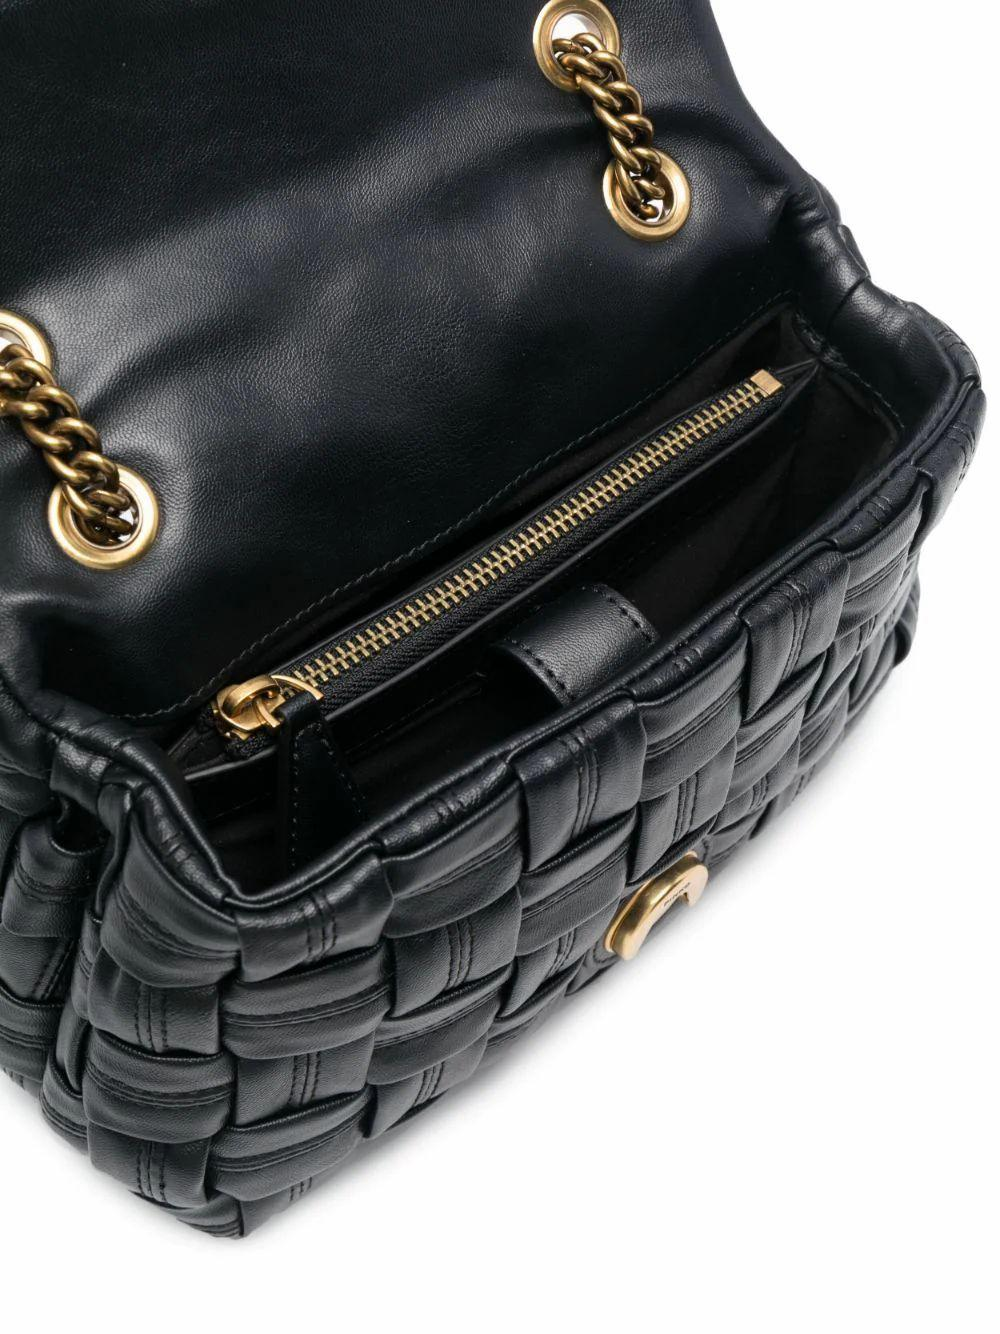 Pinko Love Bag Woven Leather Black